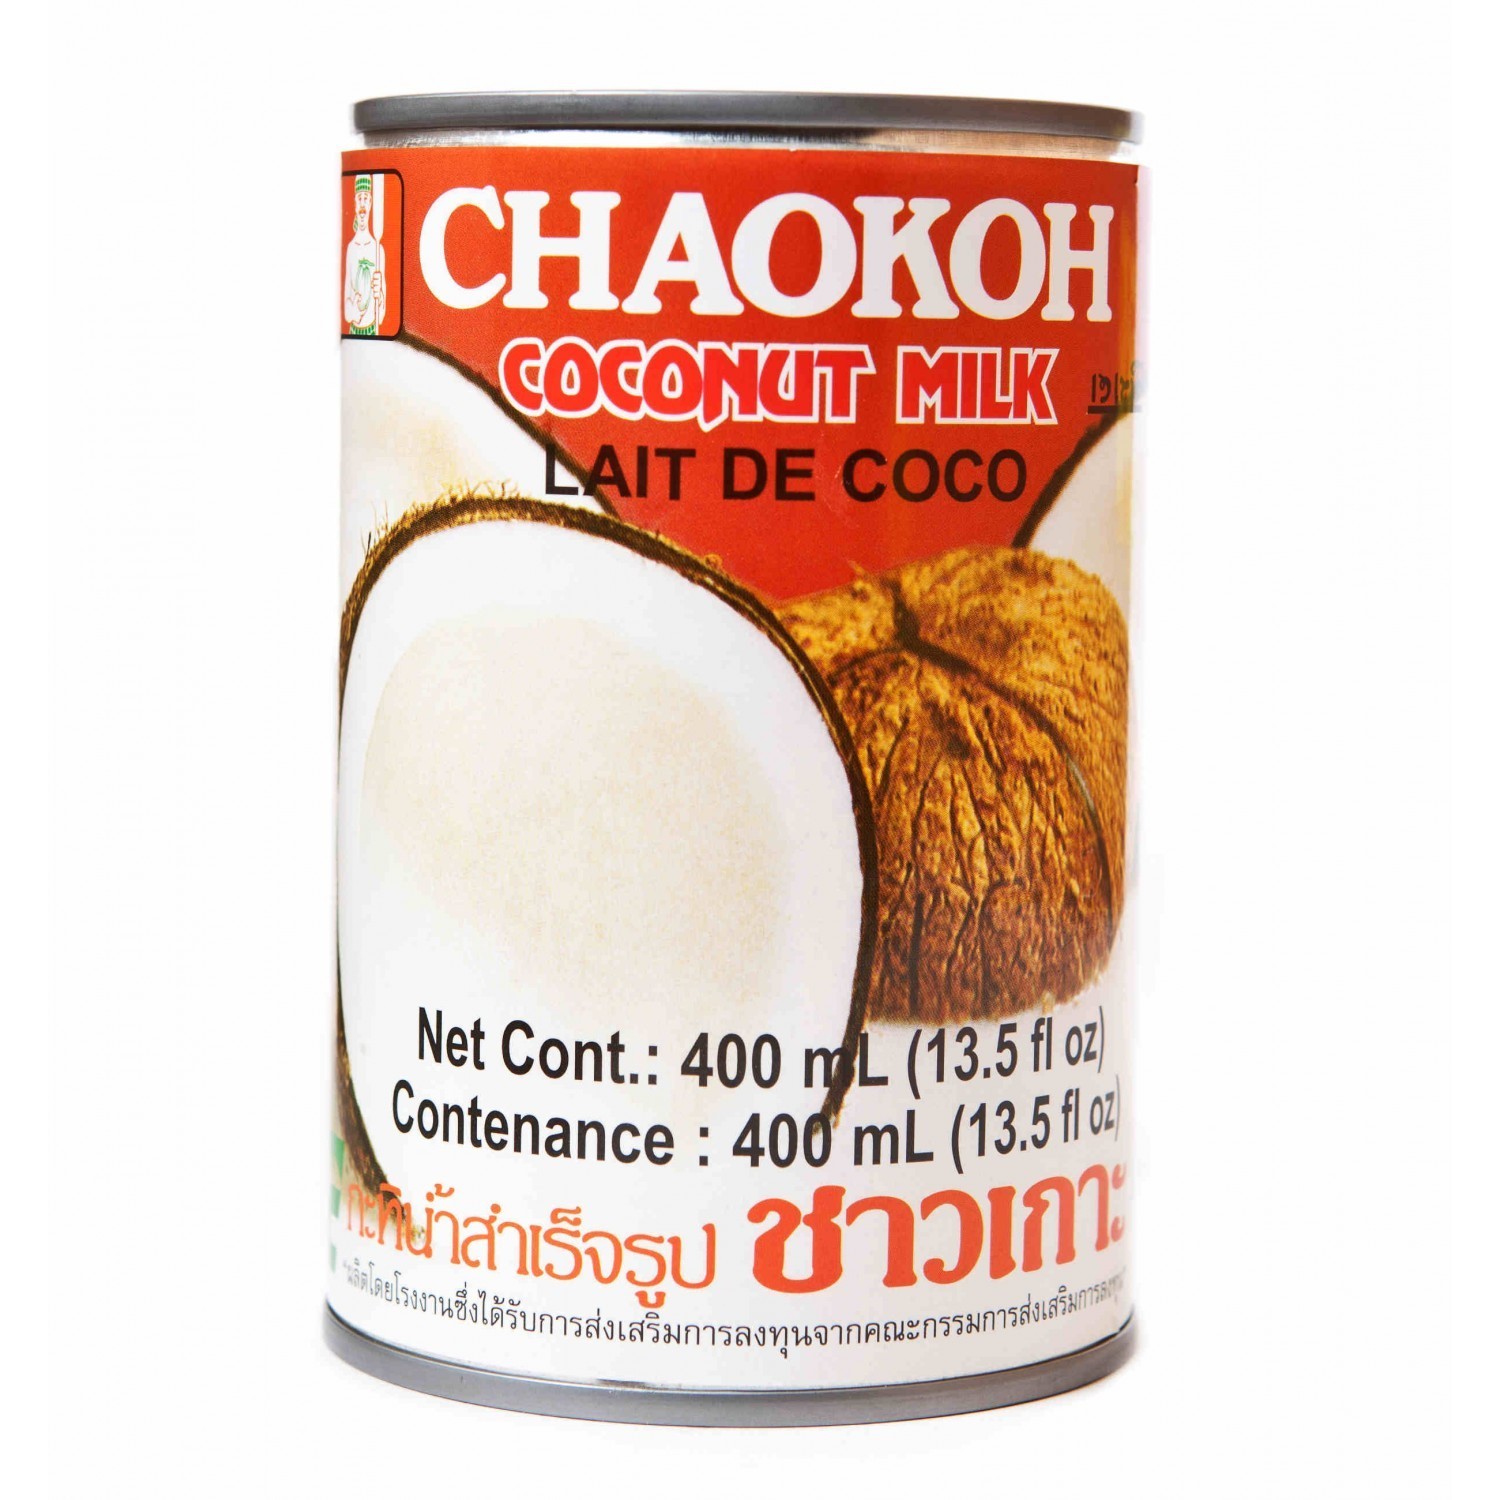 Chaokoh Coconut Milk 400ml Tinned Thai Coconut Milk